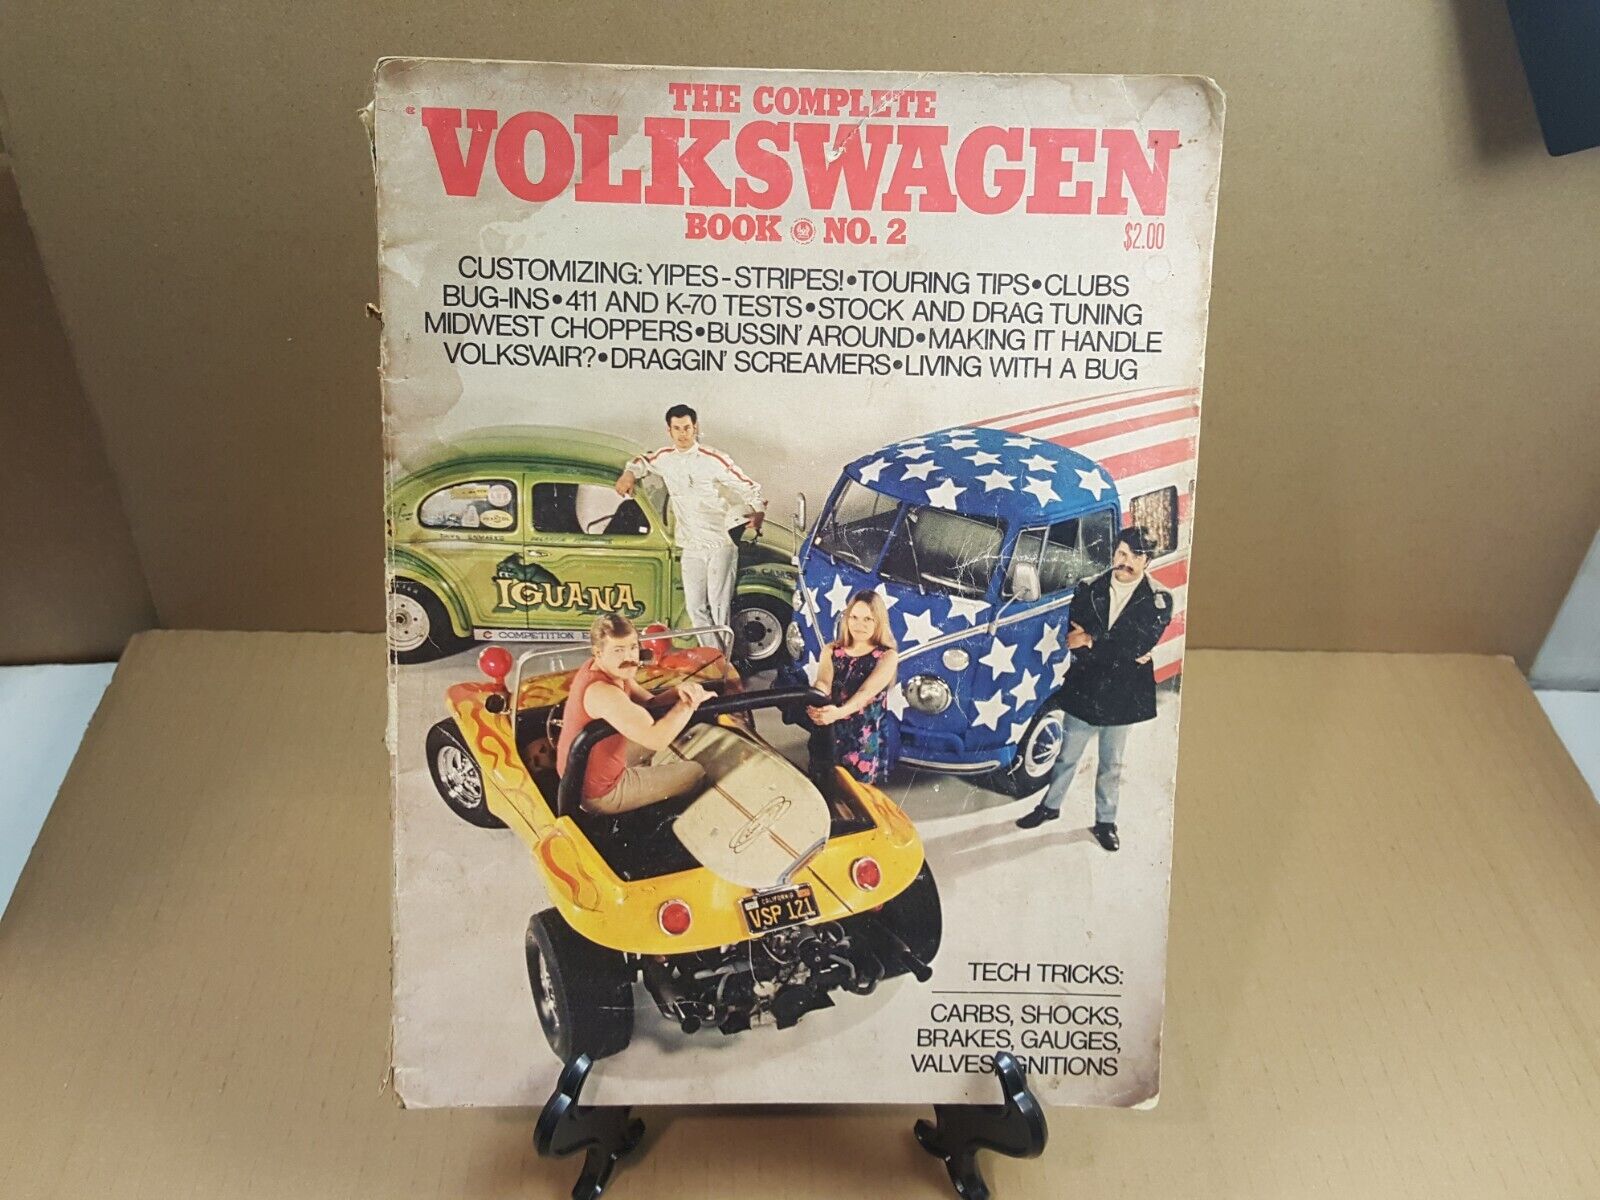 The Complete Volkswagen Book No. 2 1971 Vintage Beetle Customizing Paperback